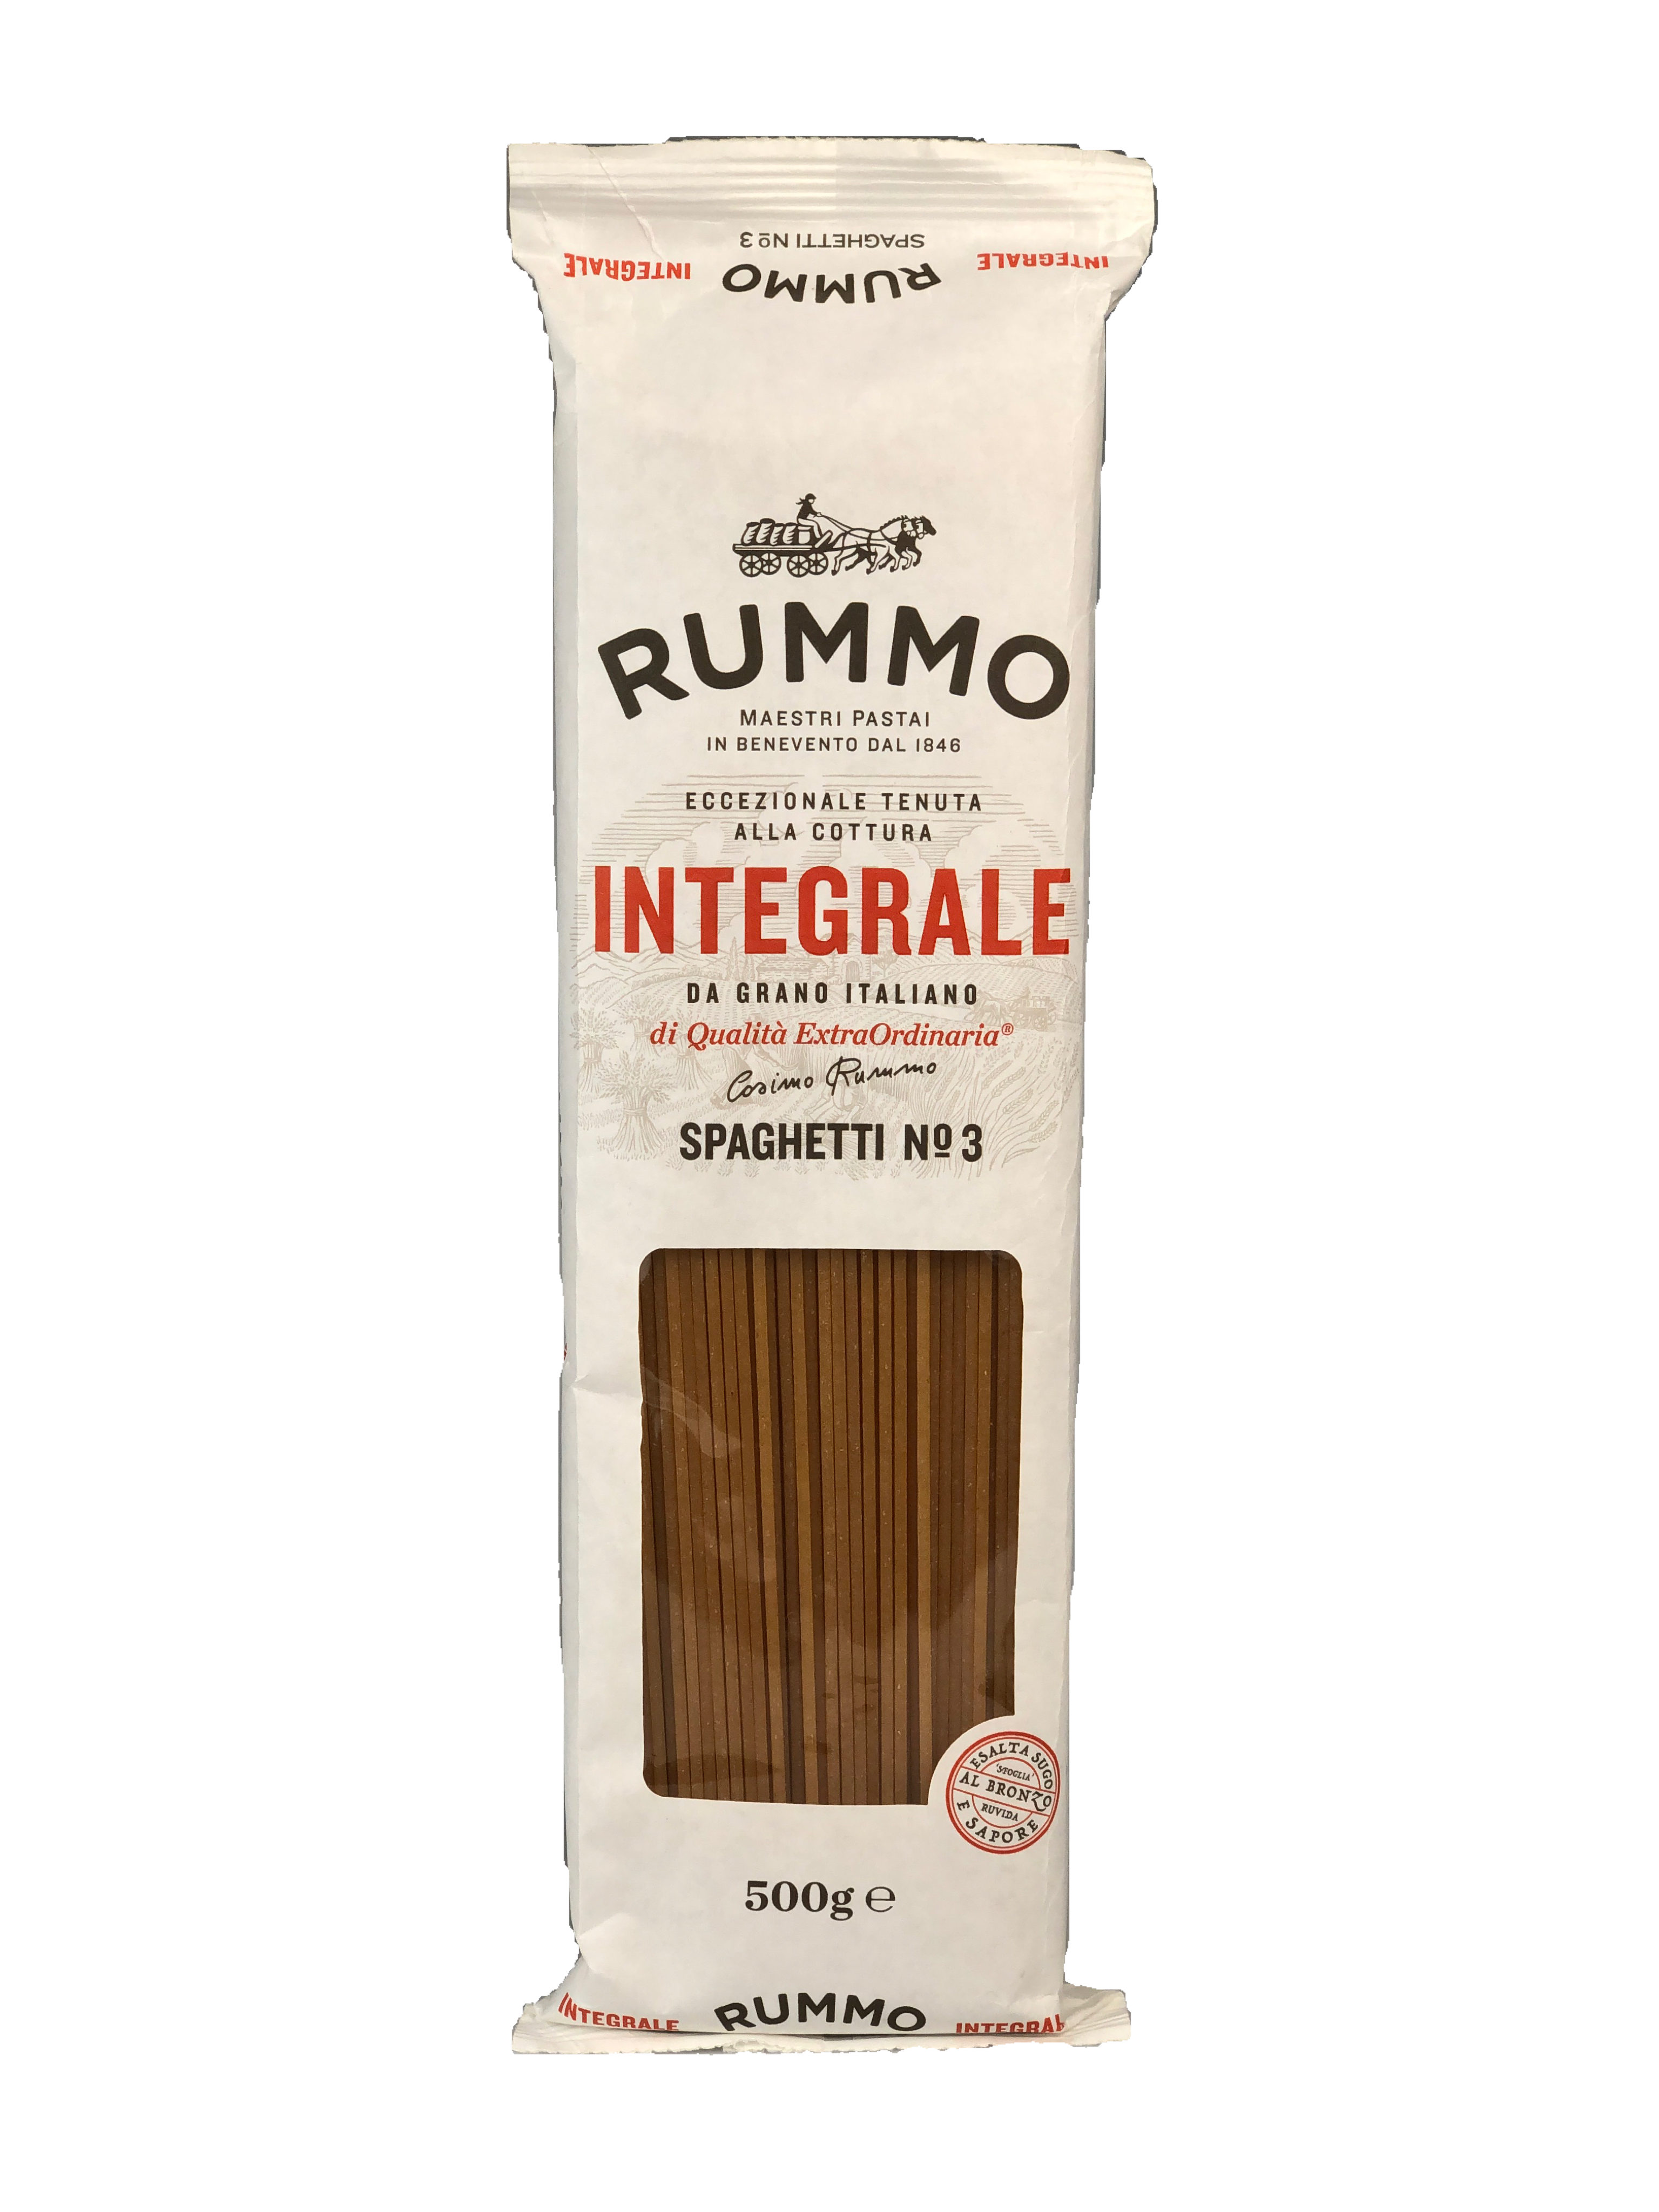 Spaghetti Integrale Rummo